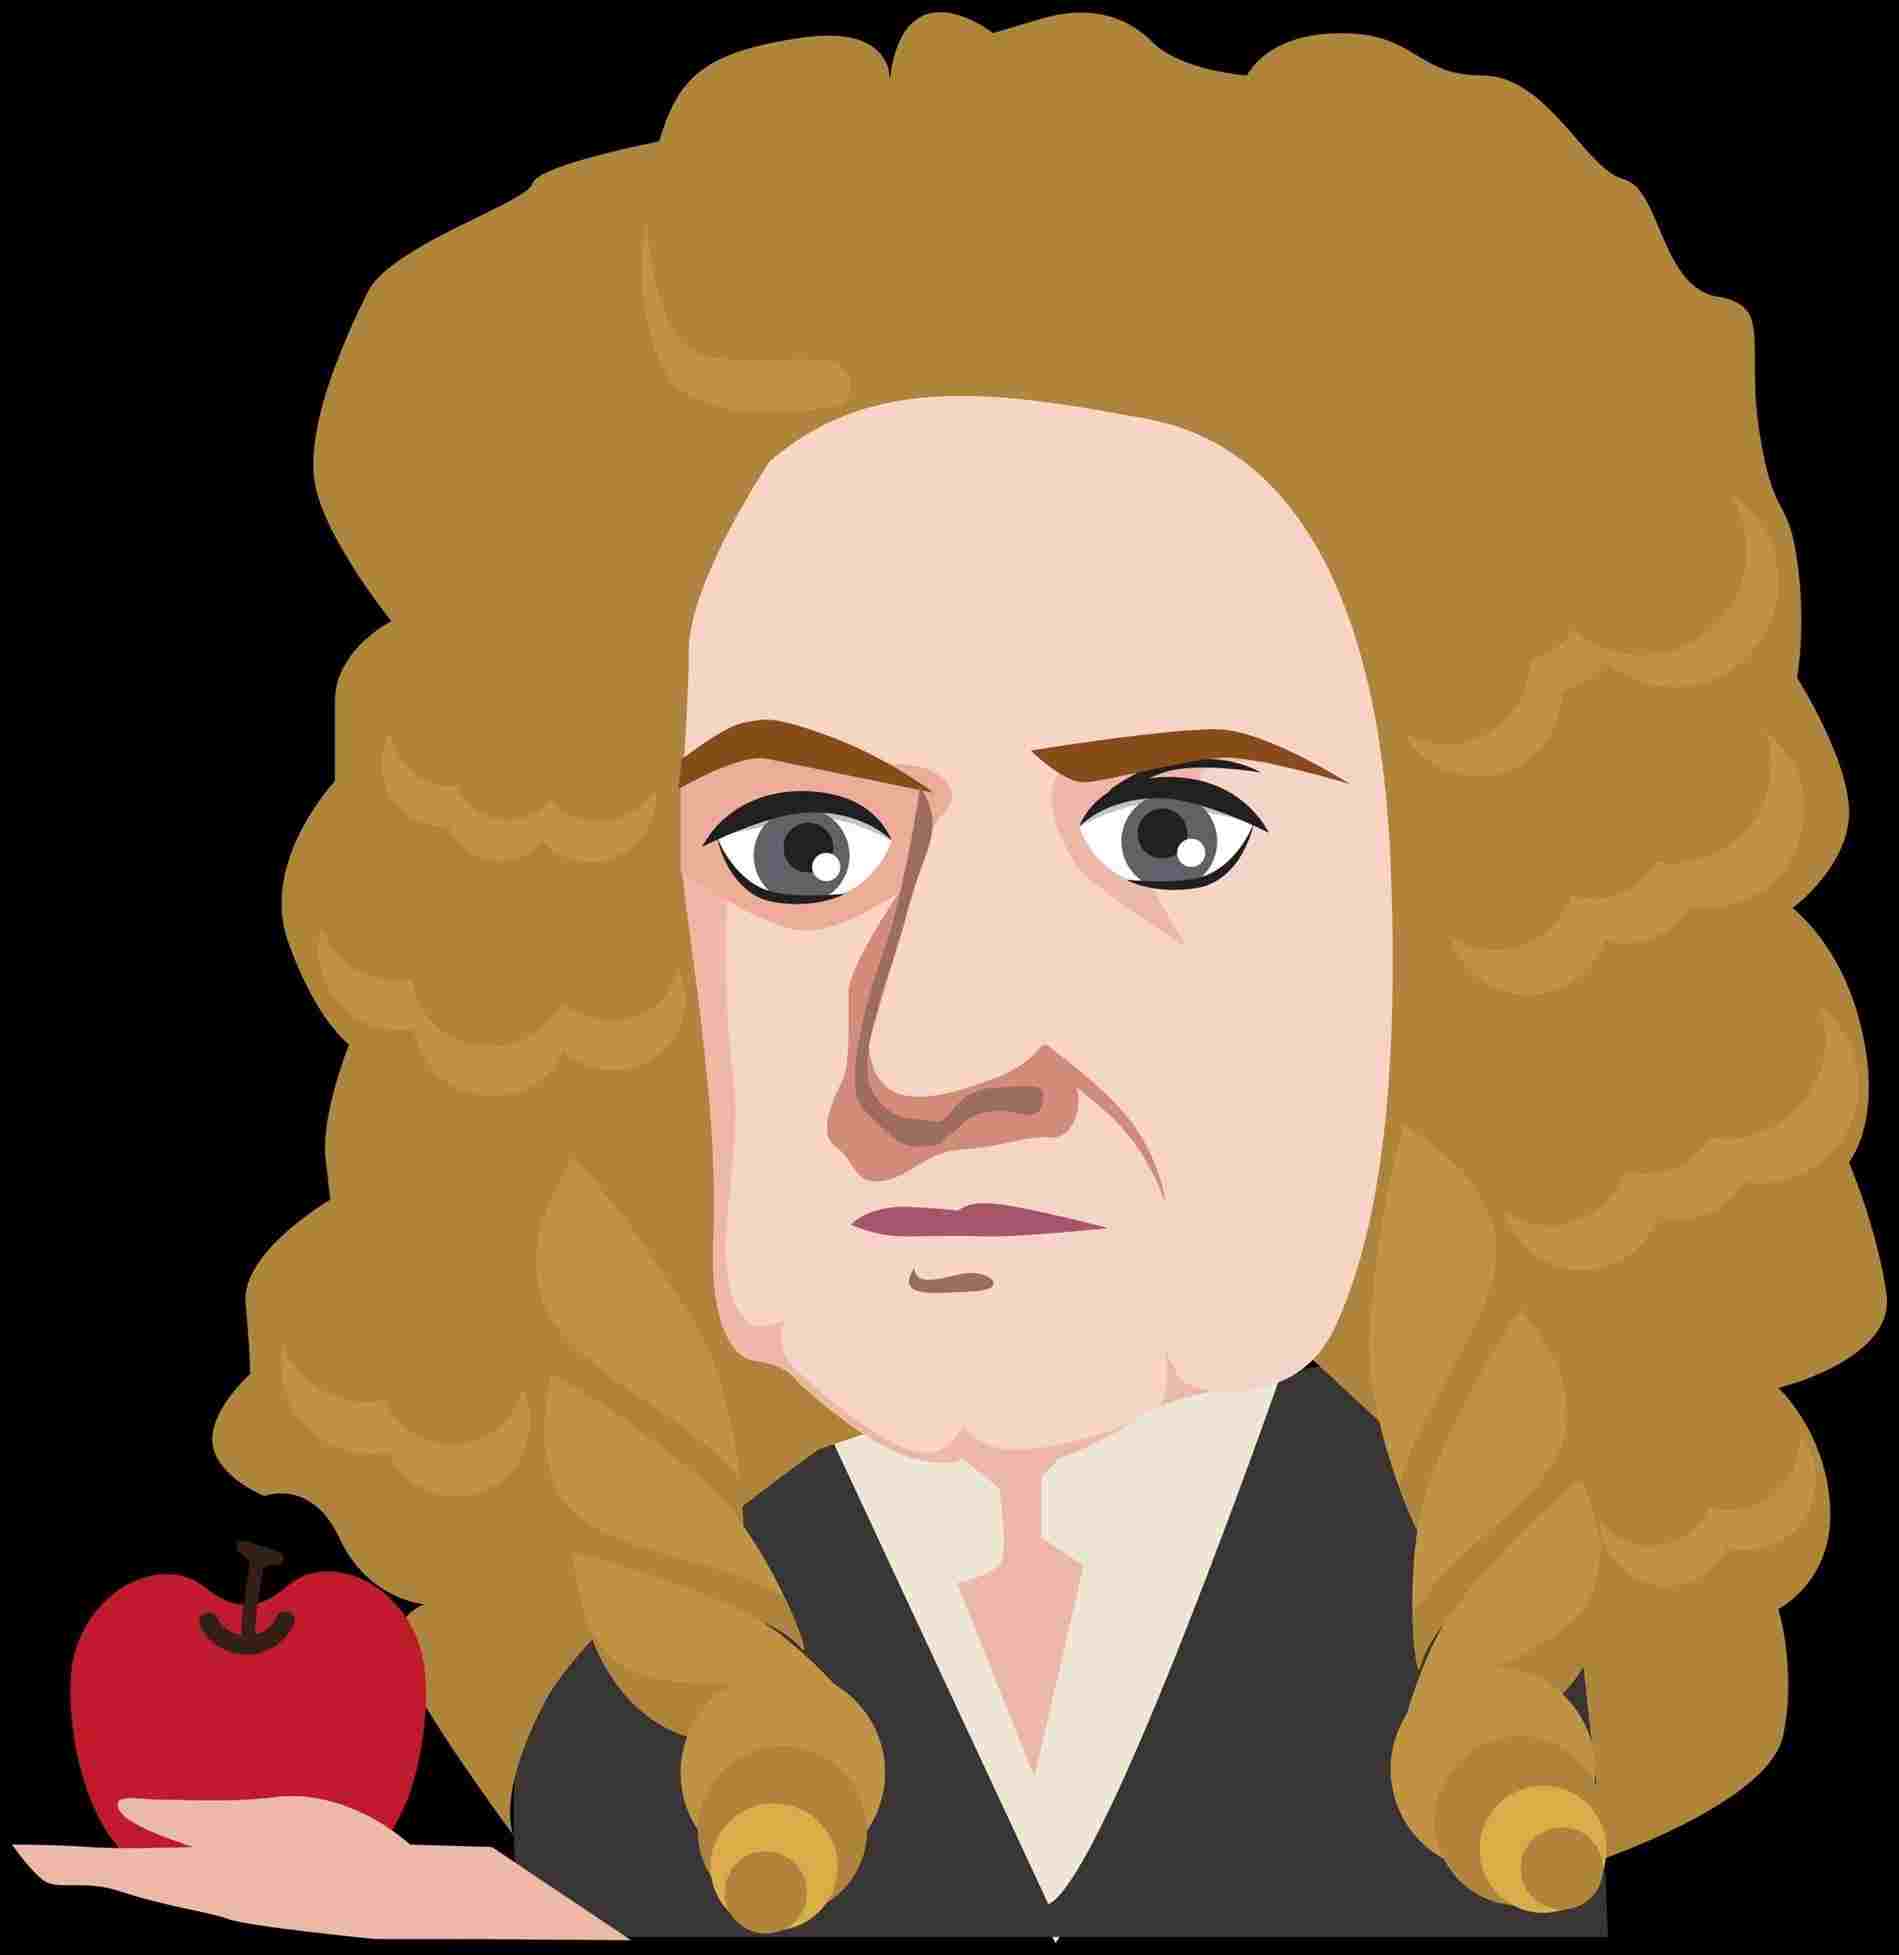 Sir Isaac Newton Drawing at Explore collection of